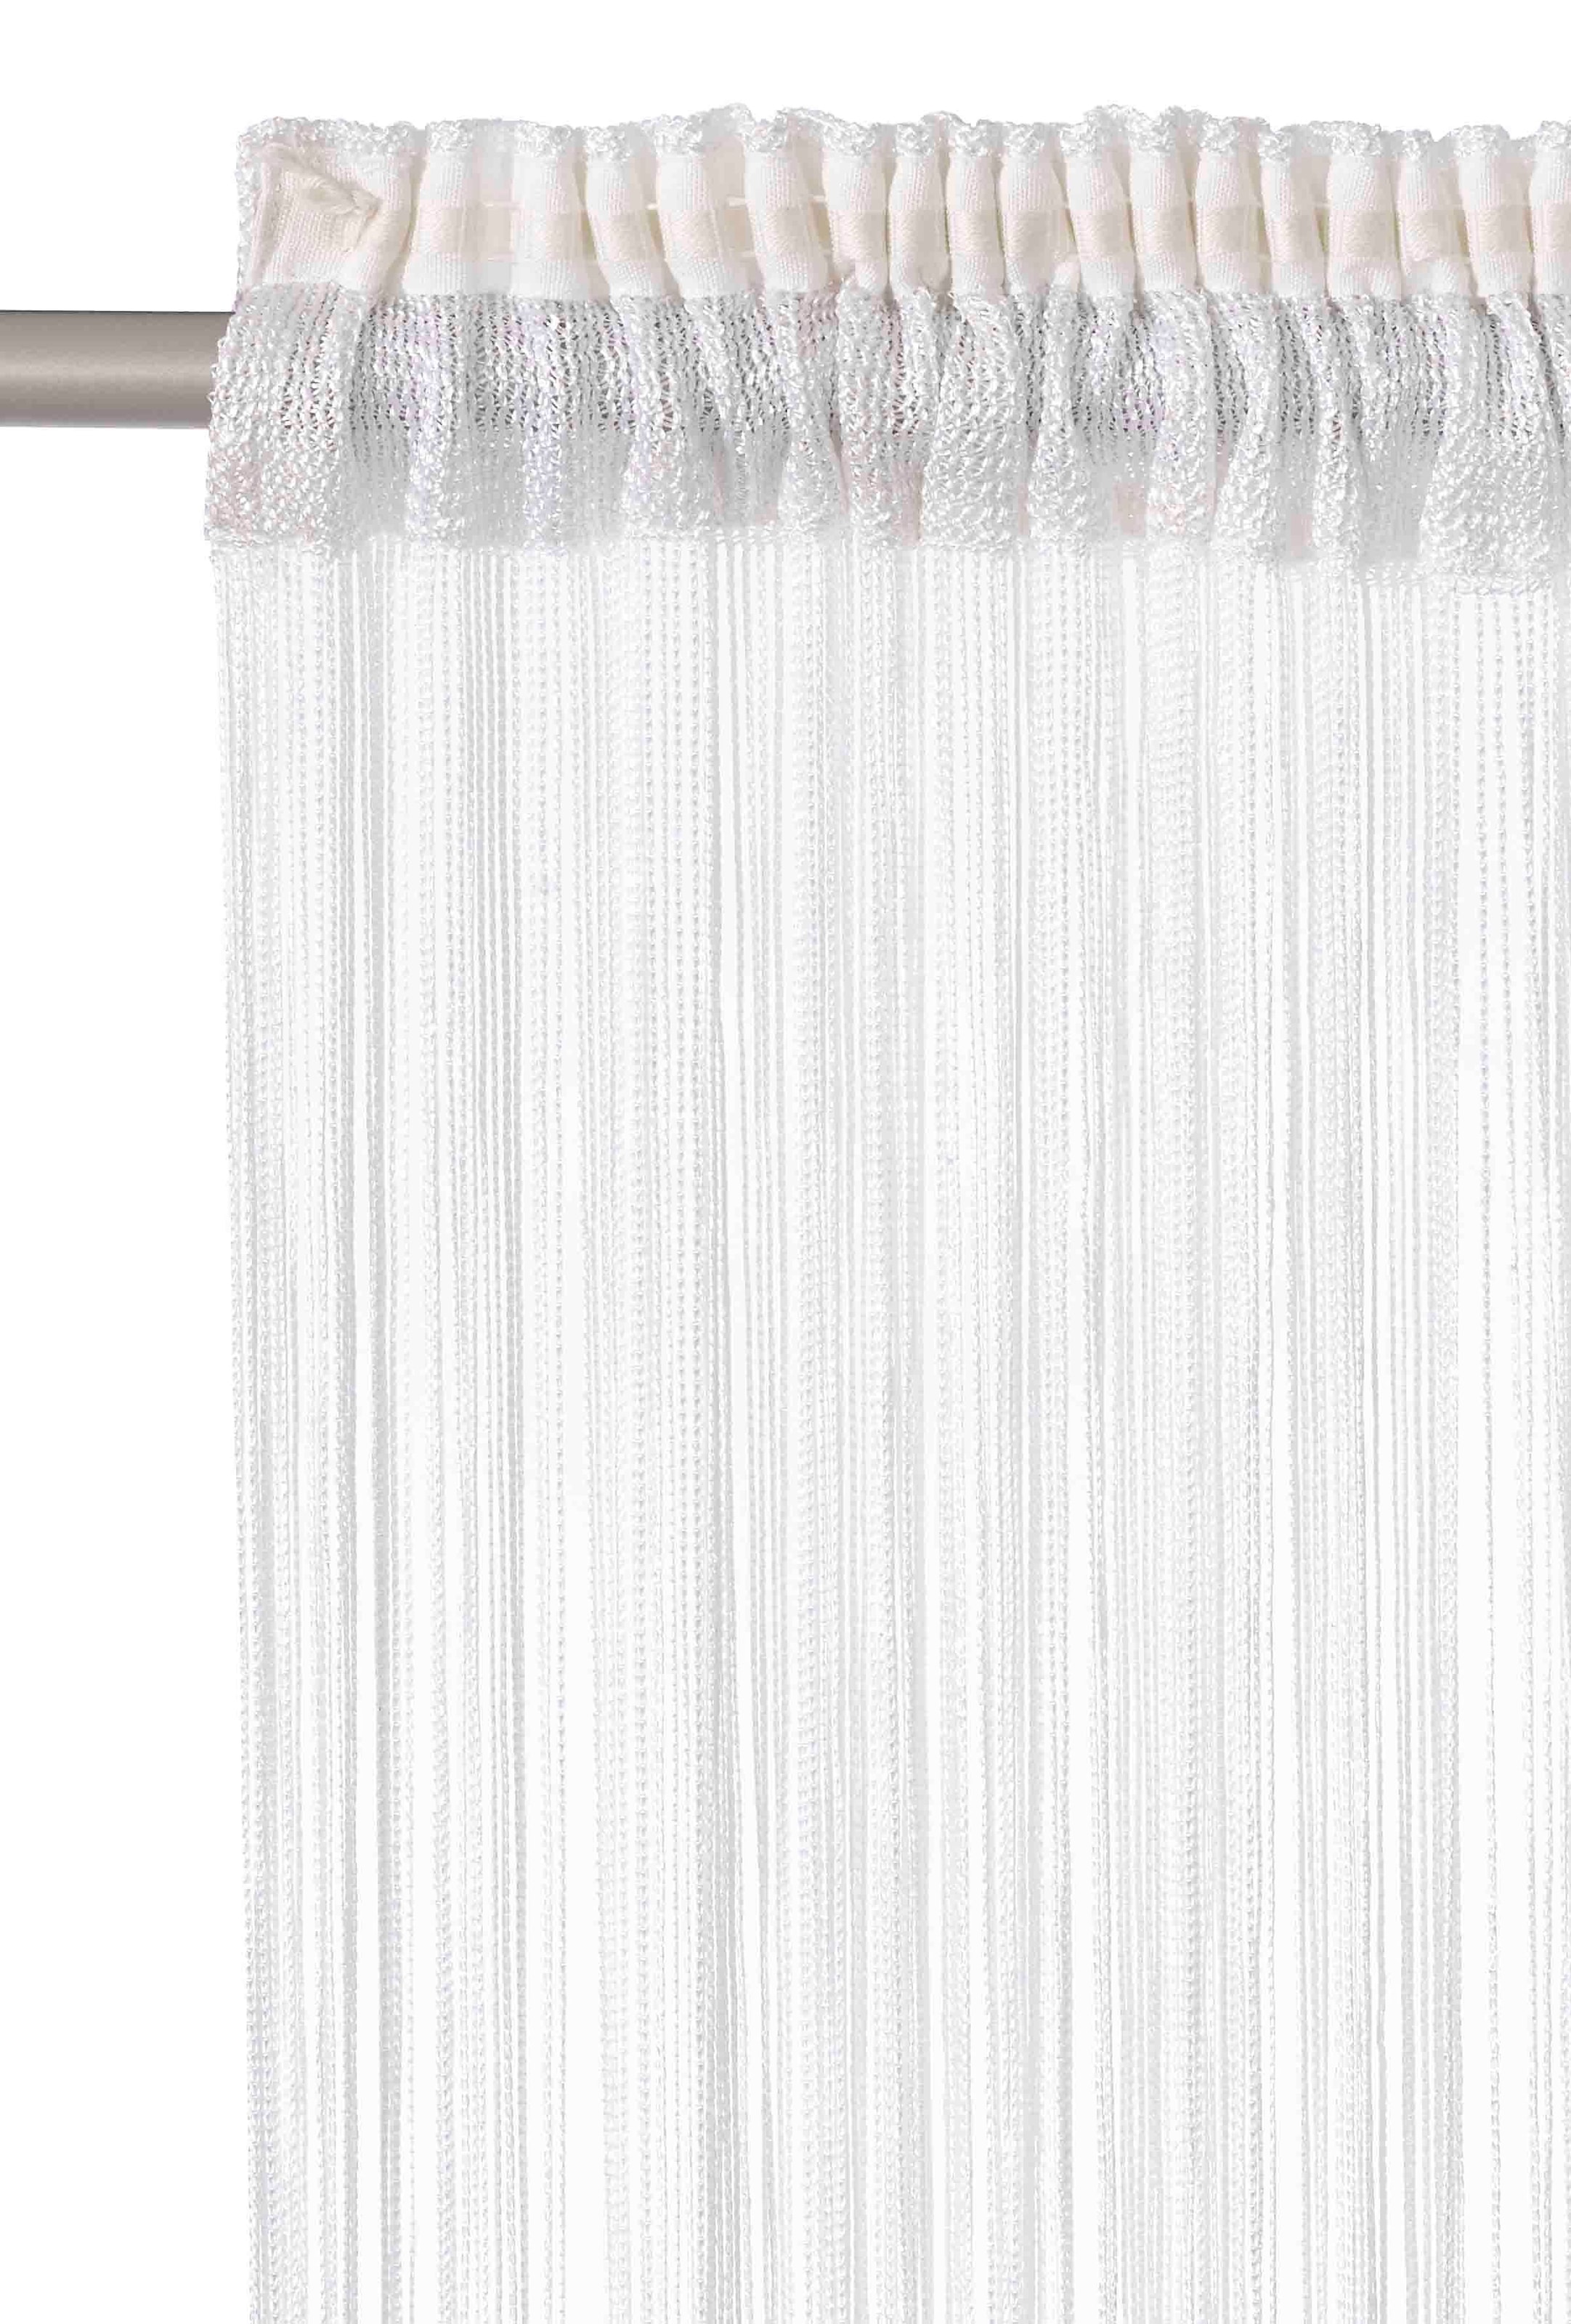 my home Fadenvorhang »Fao-Uni«, (1 St.), Kräuselband, multifunktional,  transparent, Polyester, pflegeleicht bestellen bei OTTO